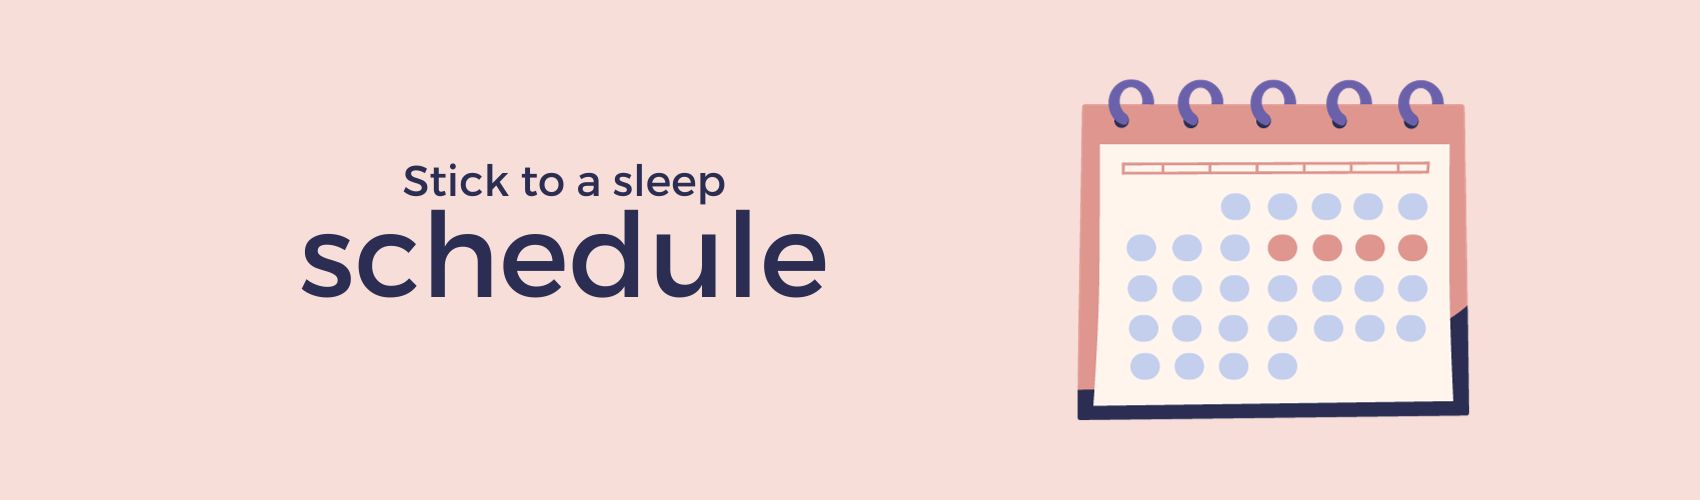 Sleep schedule